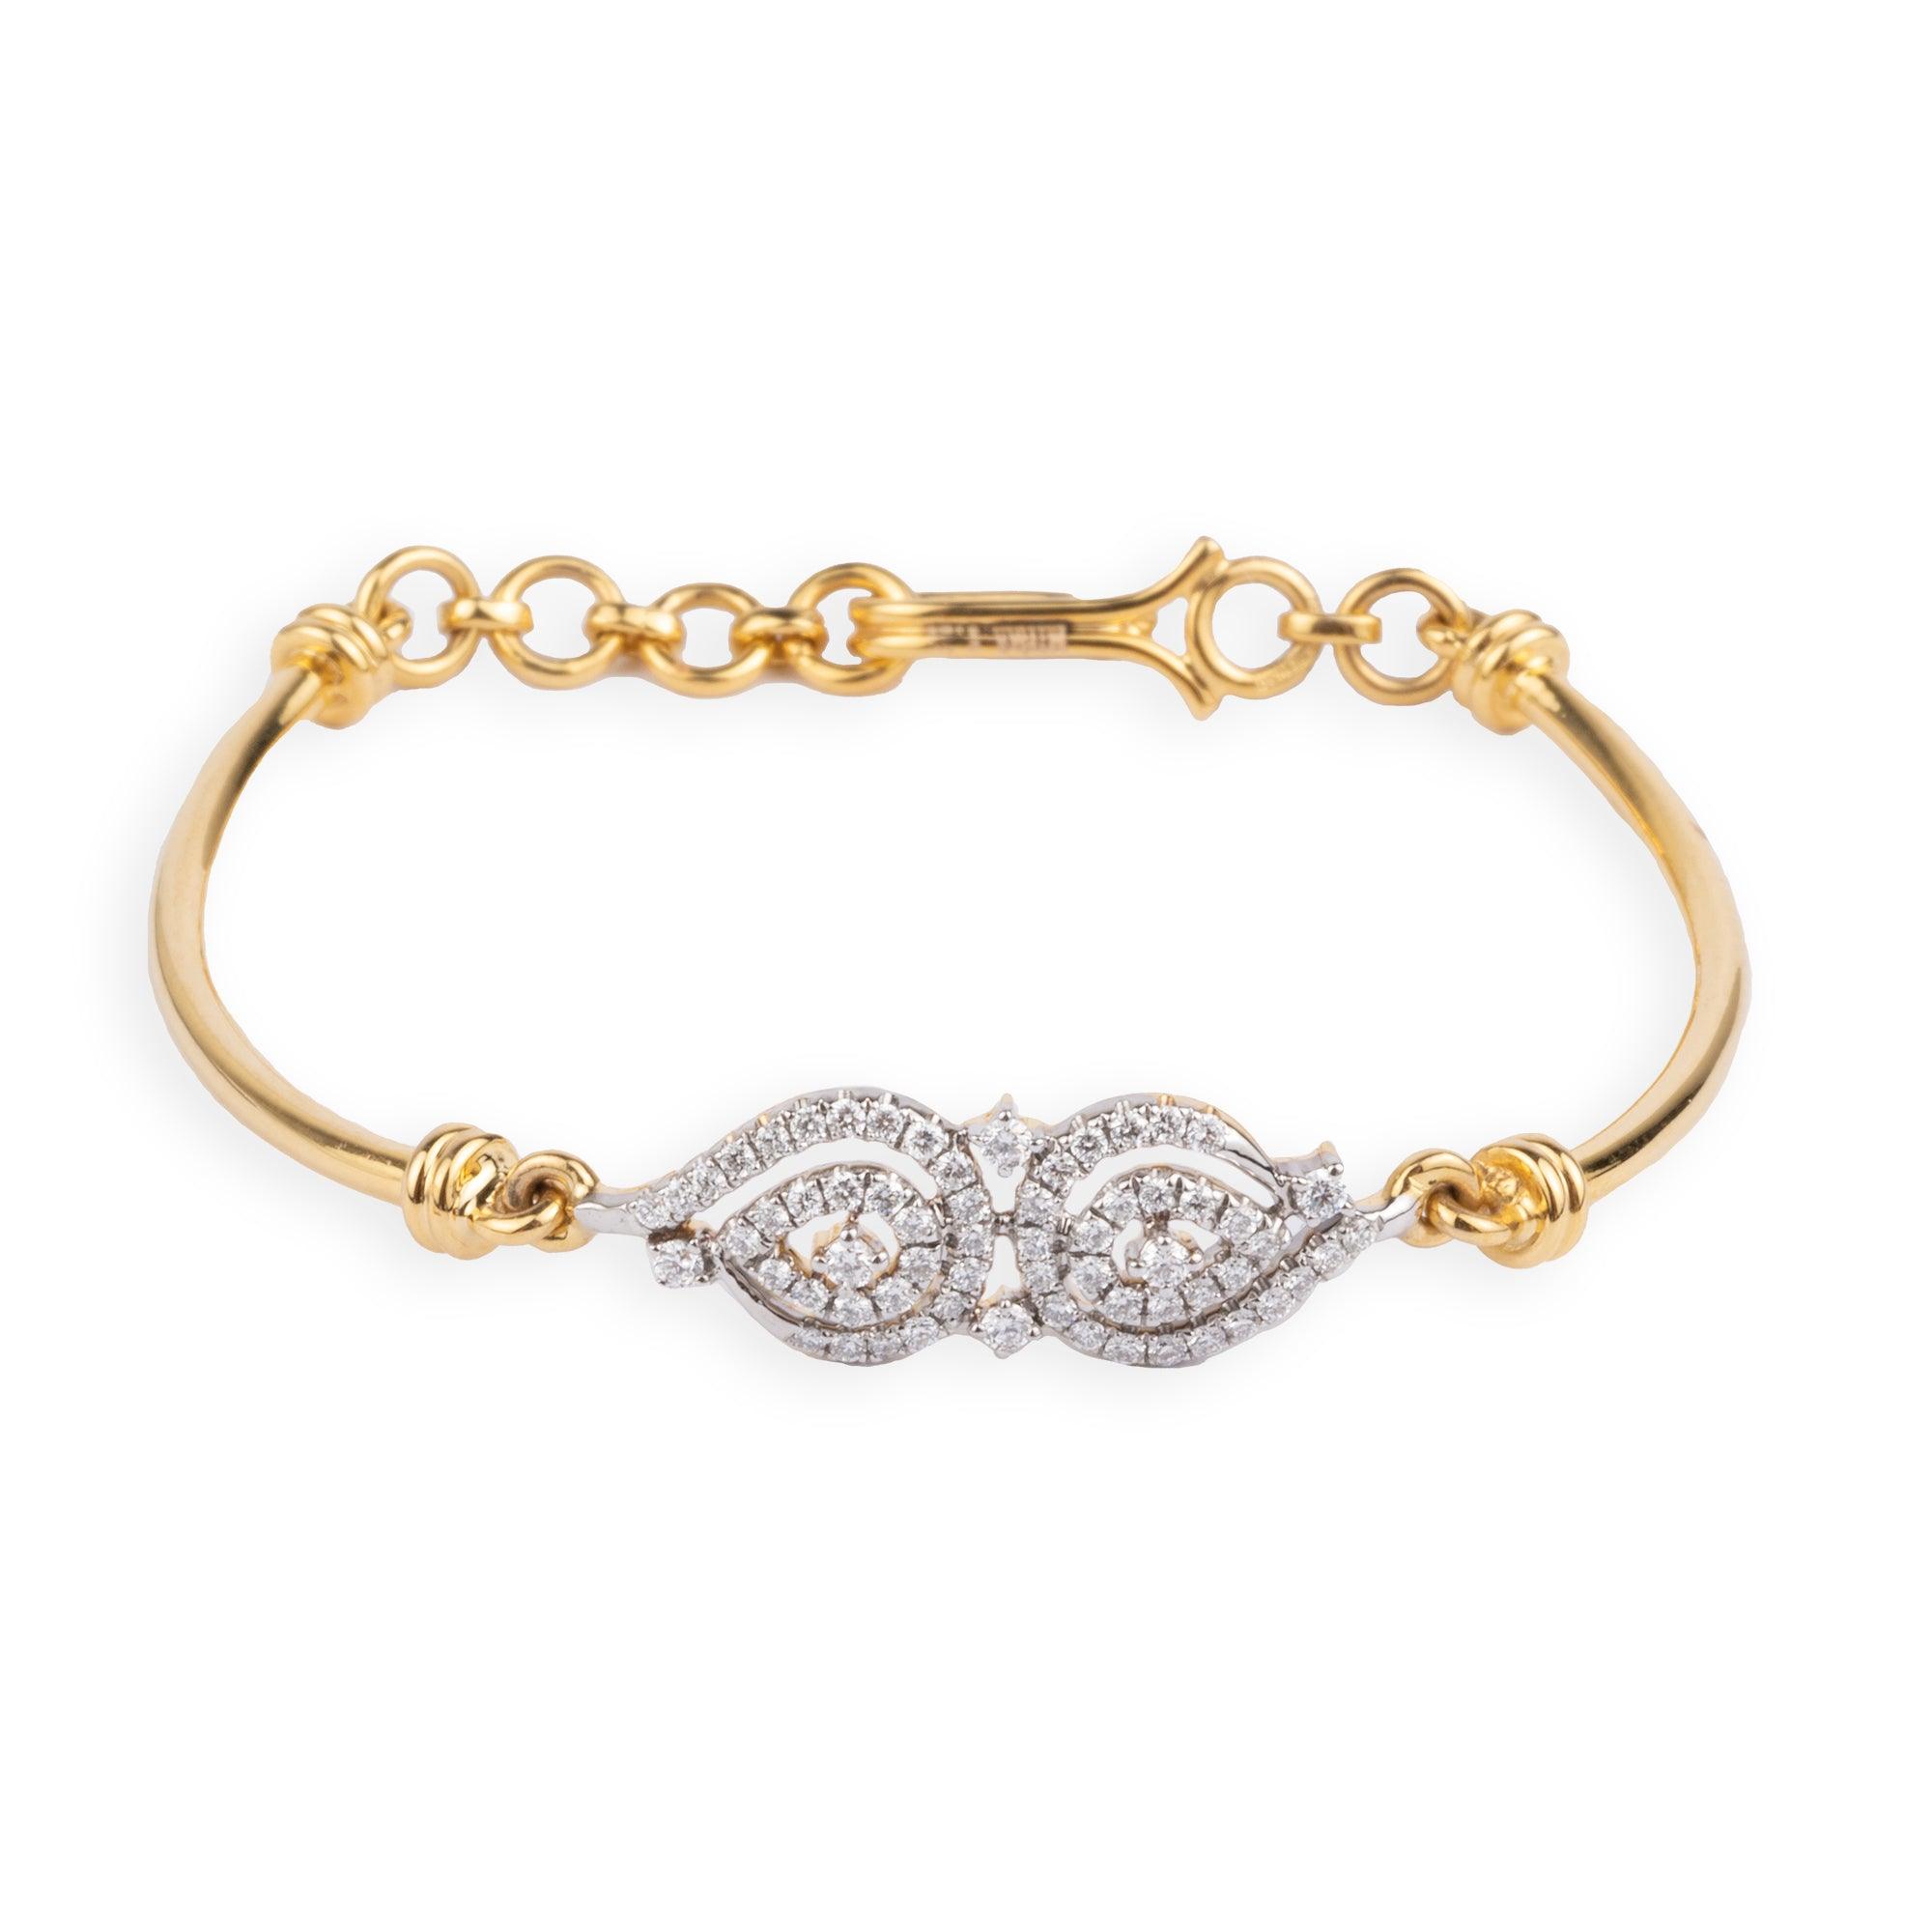 18ct Yellow Gold / 18ct White Gold Diamond Adjustable Children's Bangle Bracelet MCS4790 - Minar Jewellers